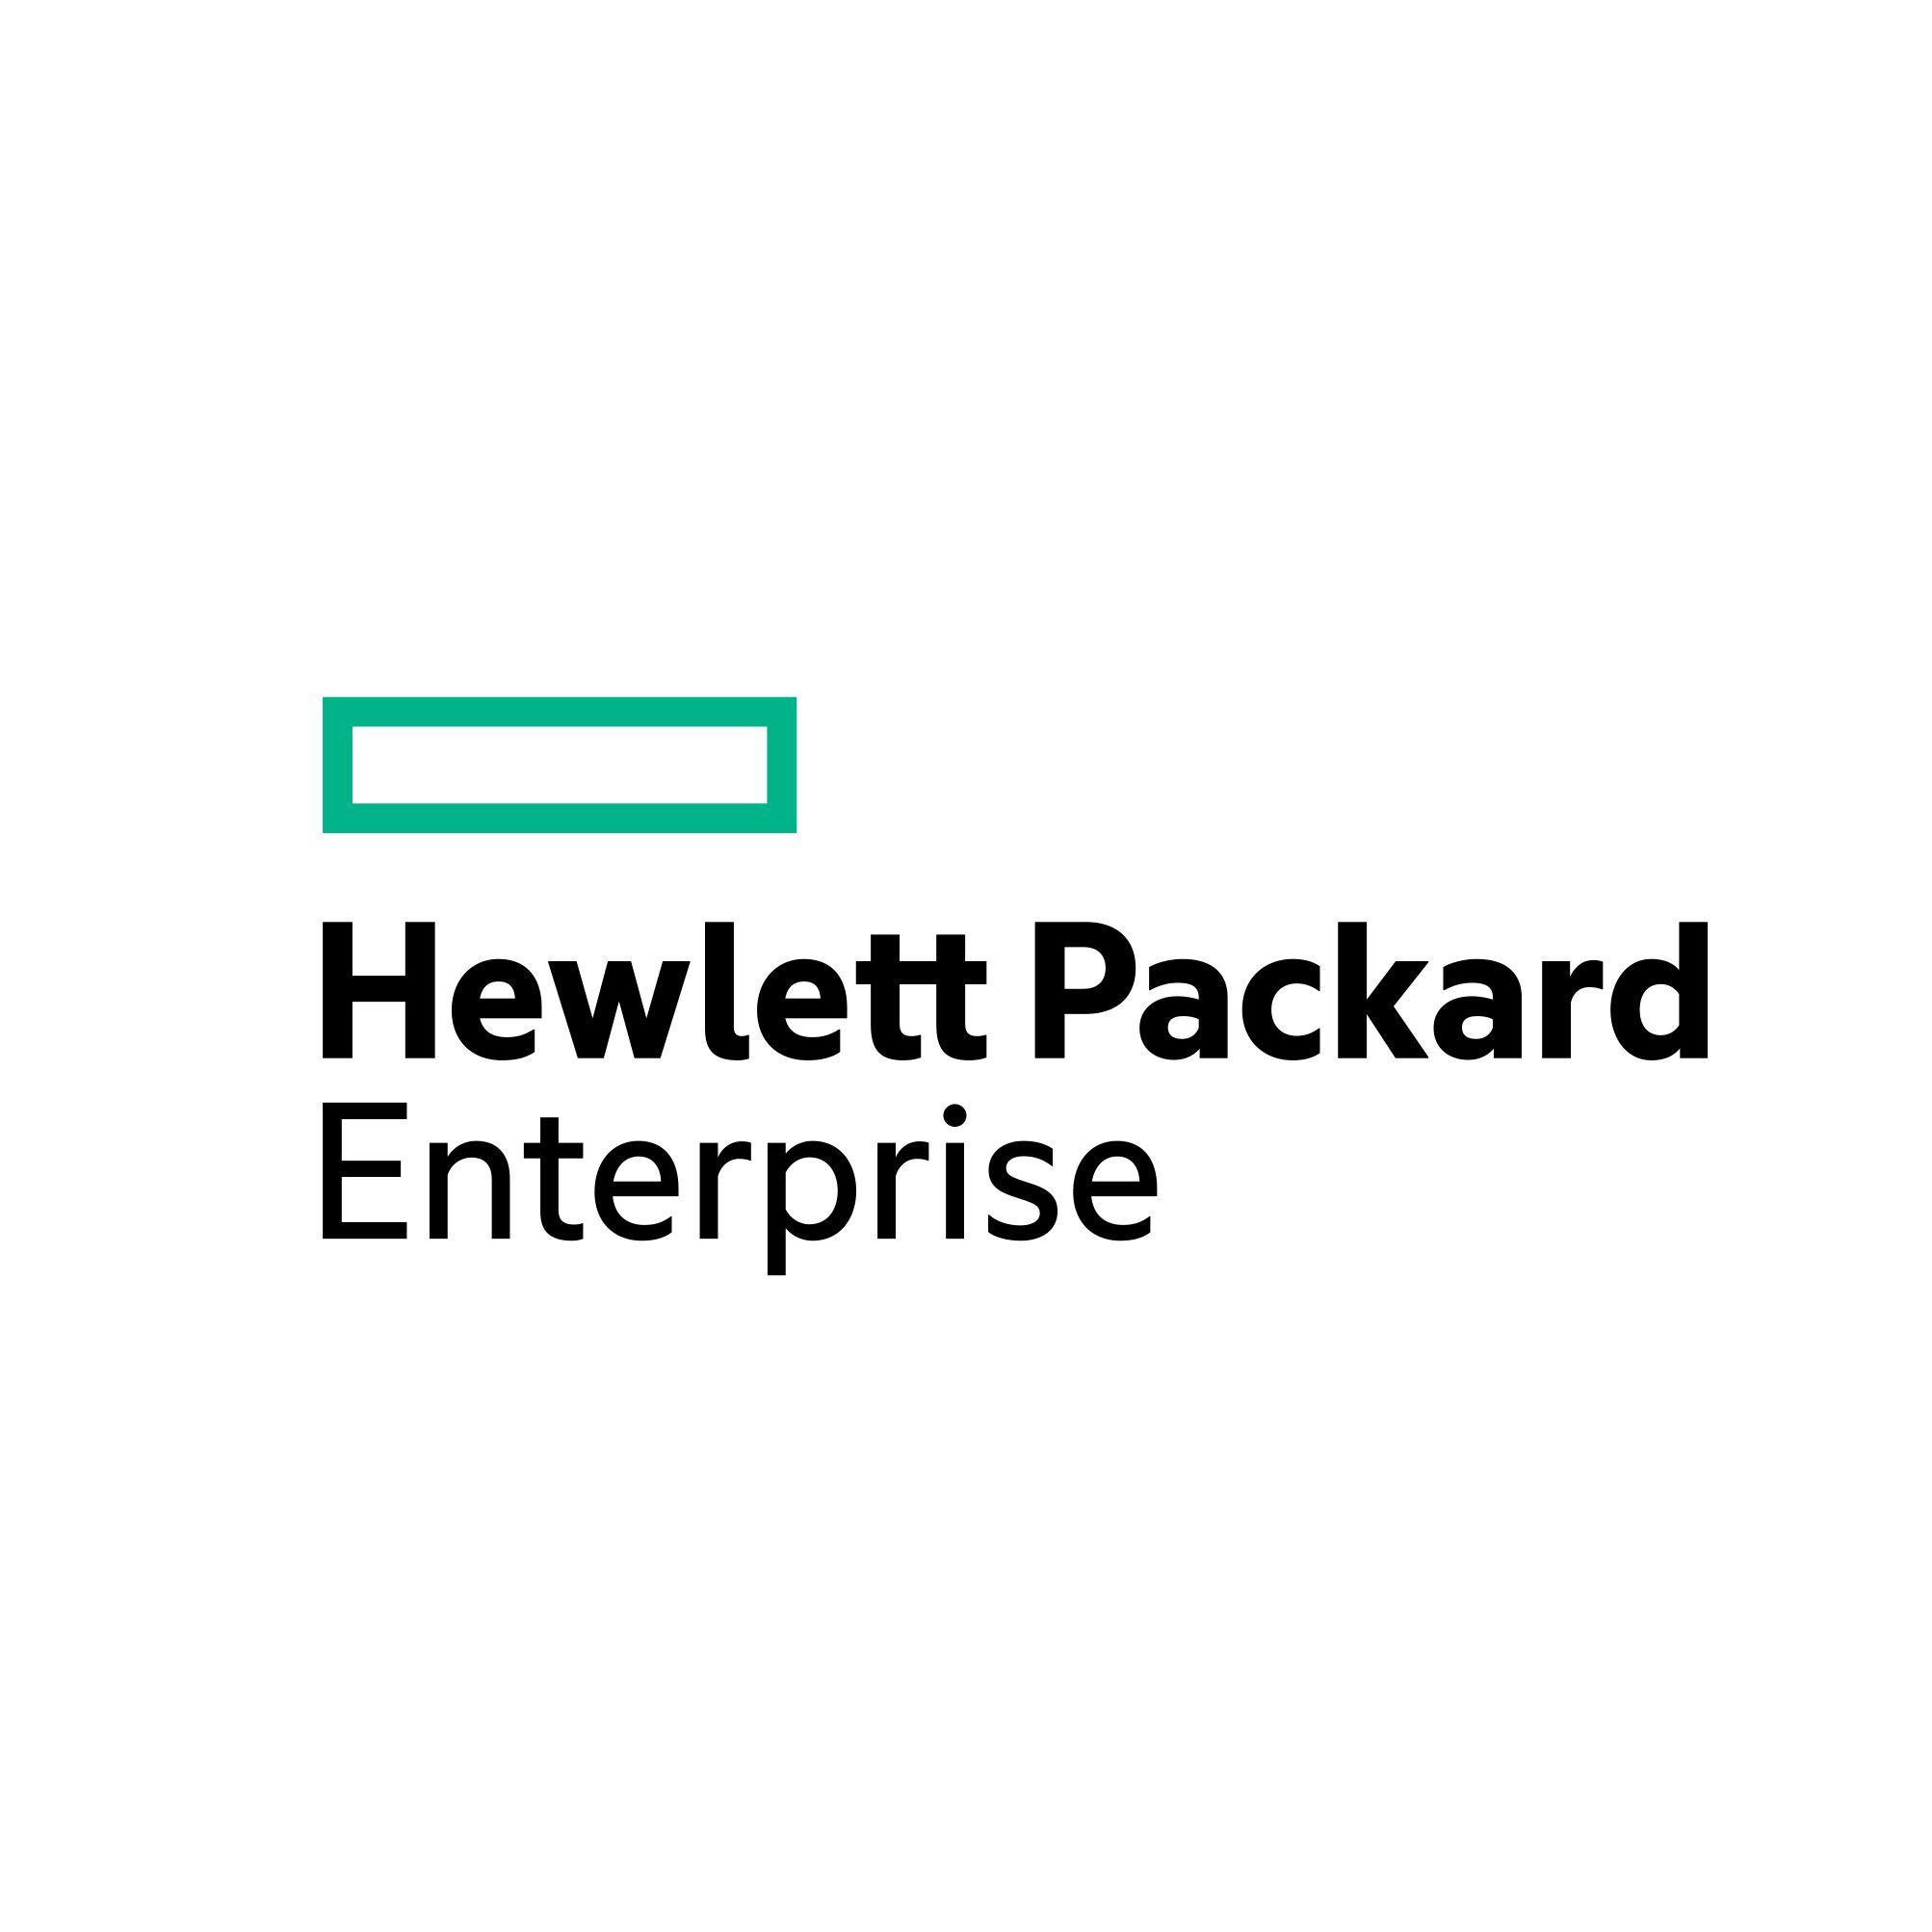 HP Corporate Logo - Hewlett Packard Enterprise (HPE)